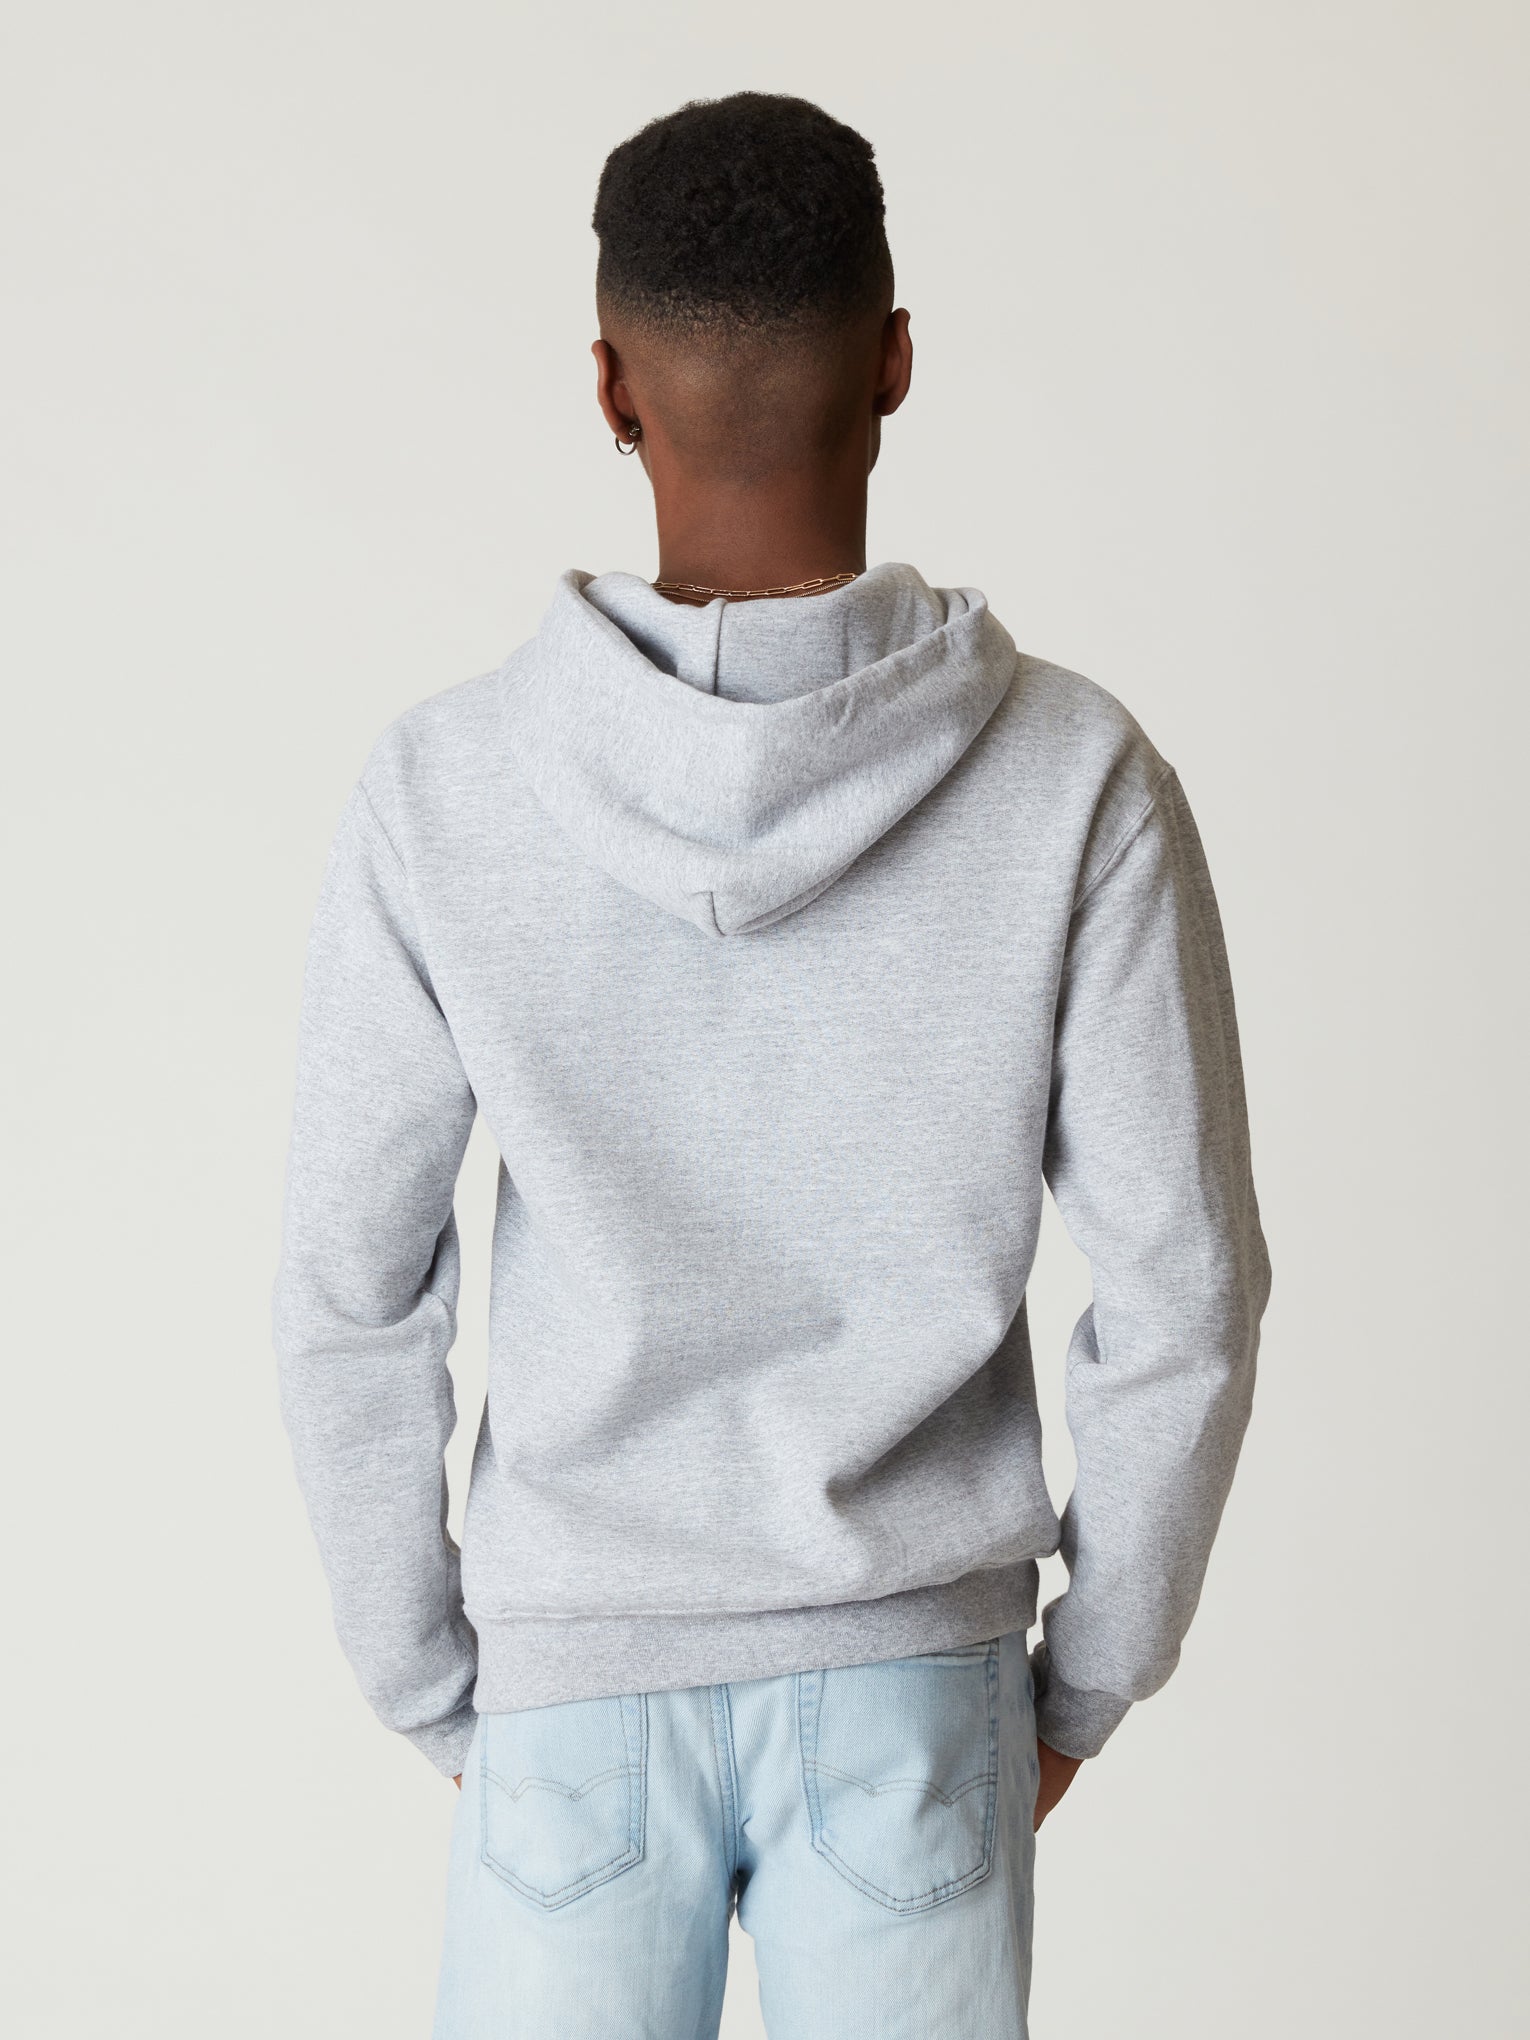 MIT Hooded Sweatshirt – The Harvard Shop